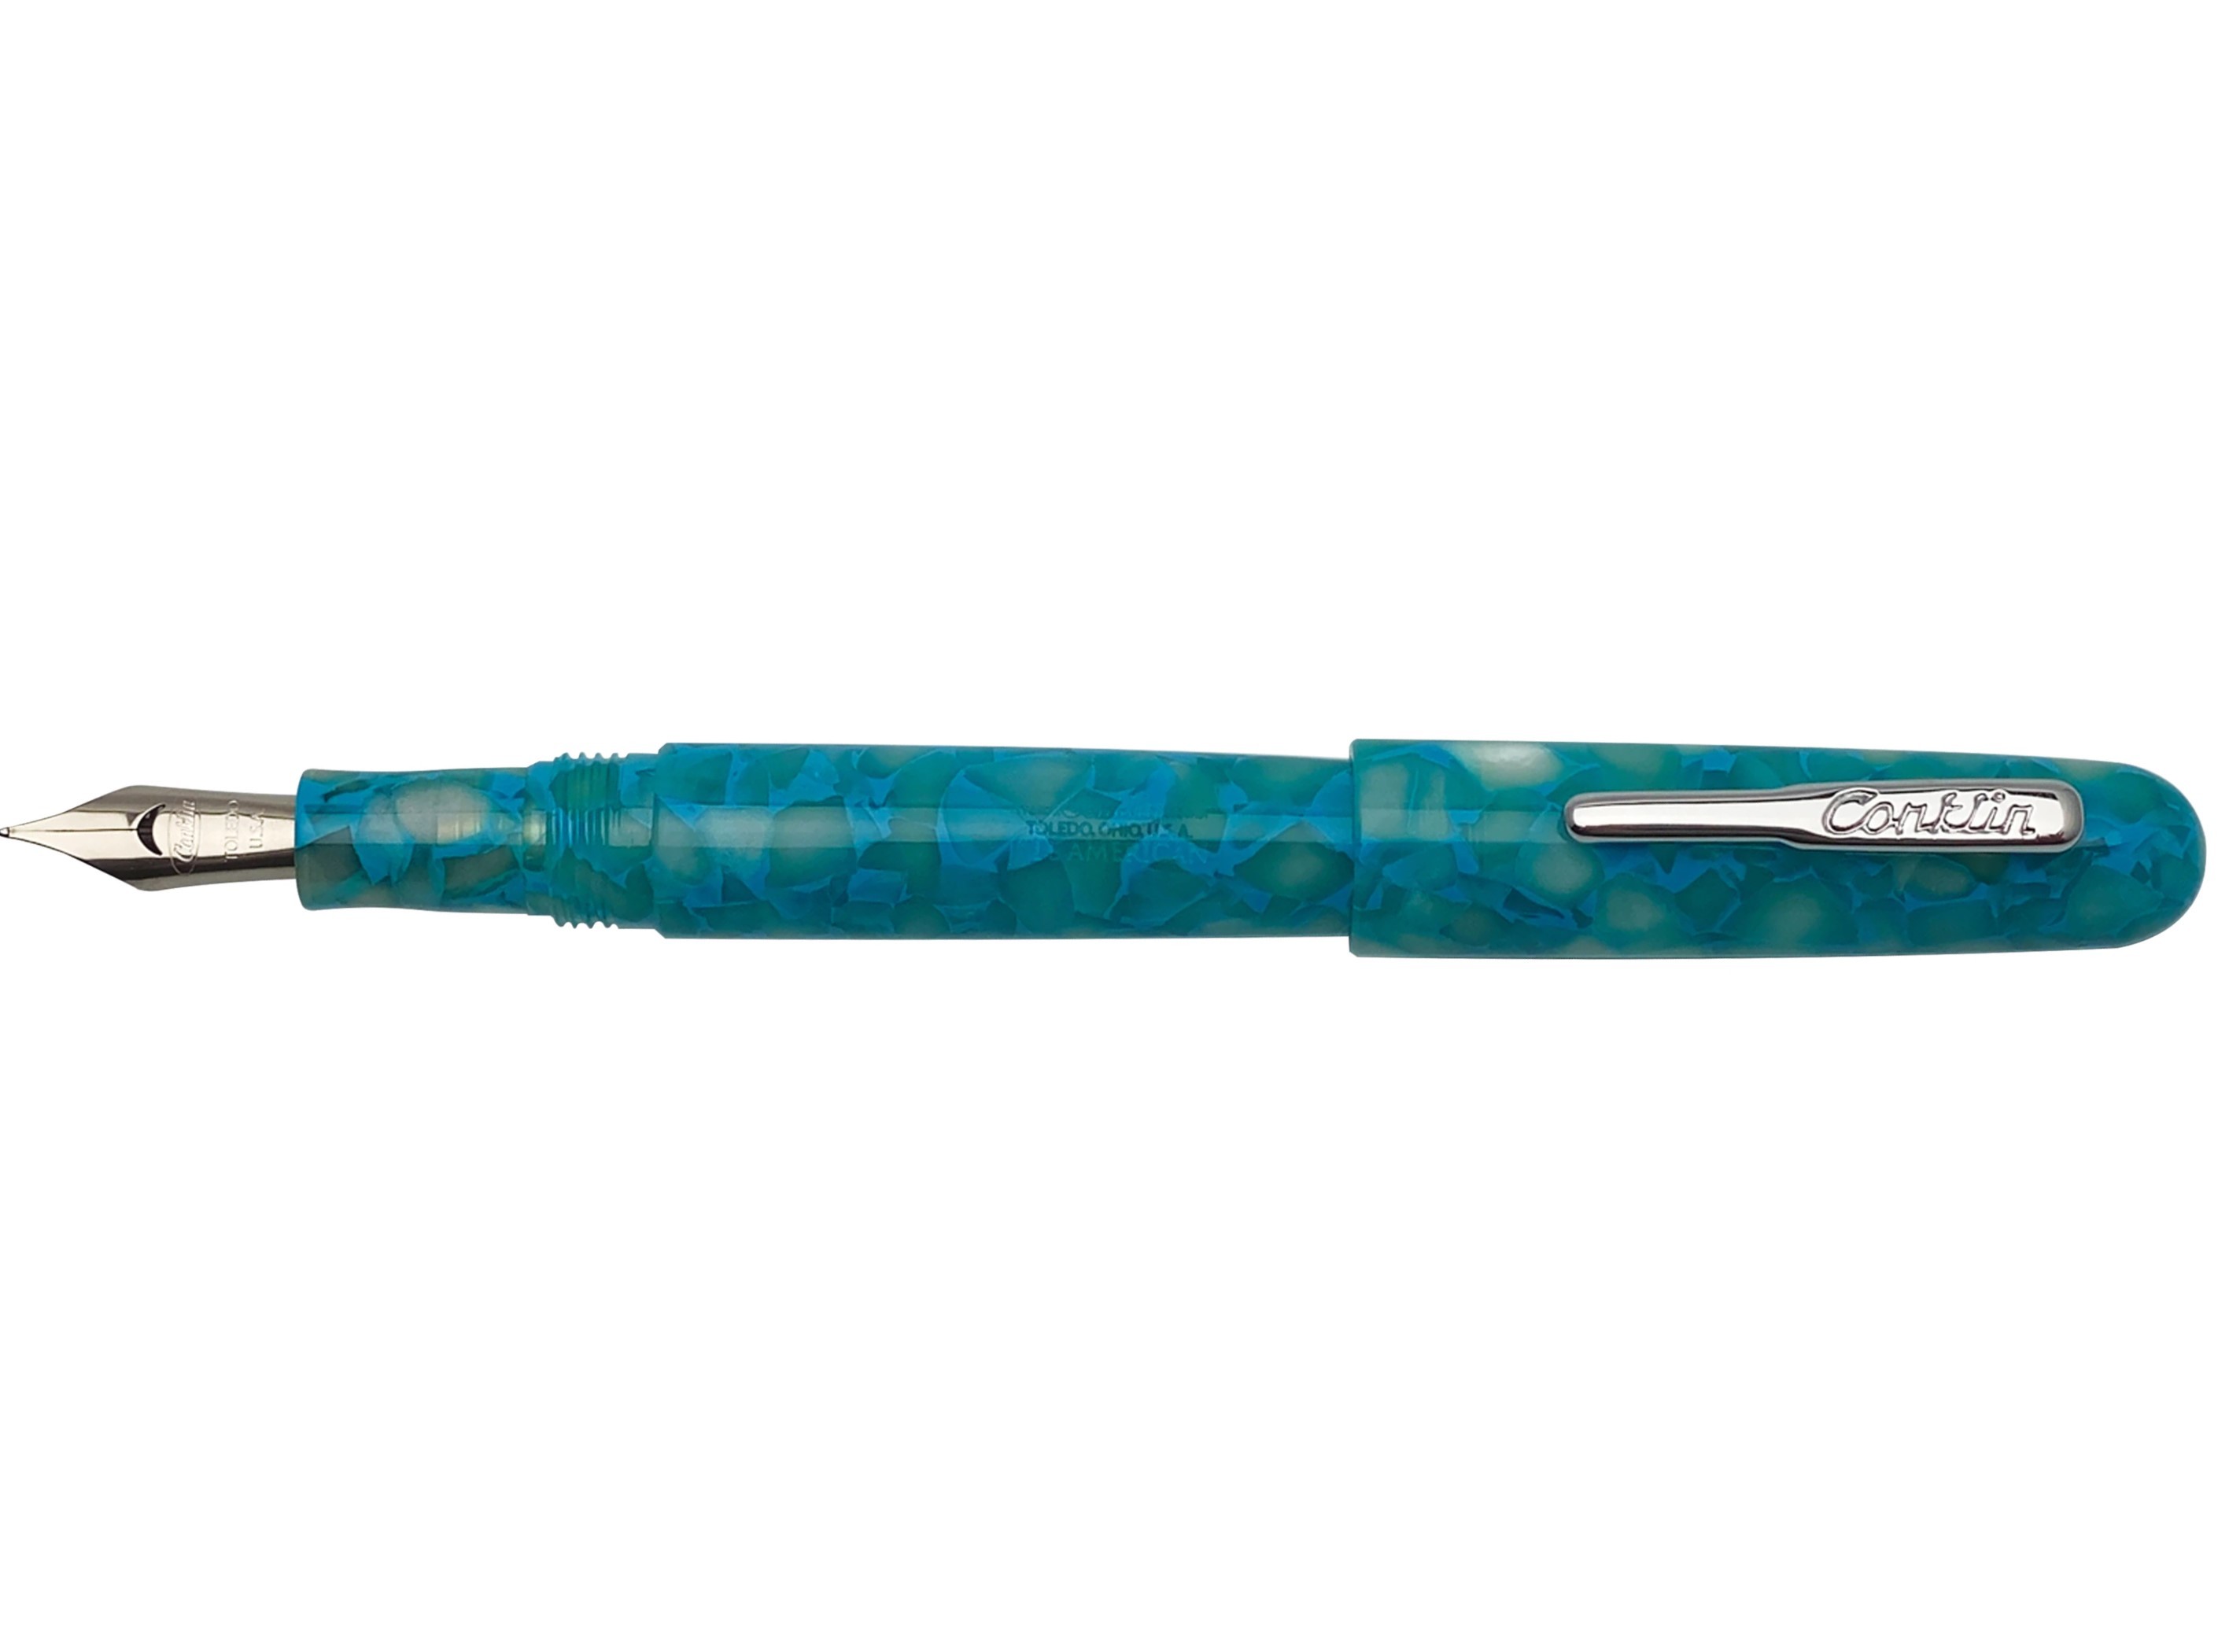 Conklin All American Fountain Pen Turquoise Serenity